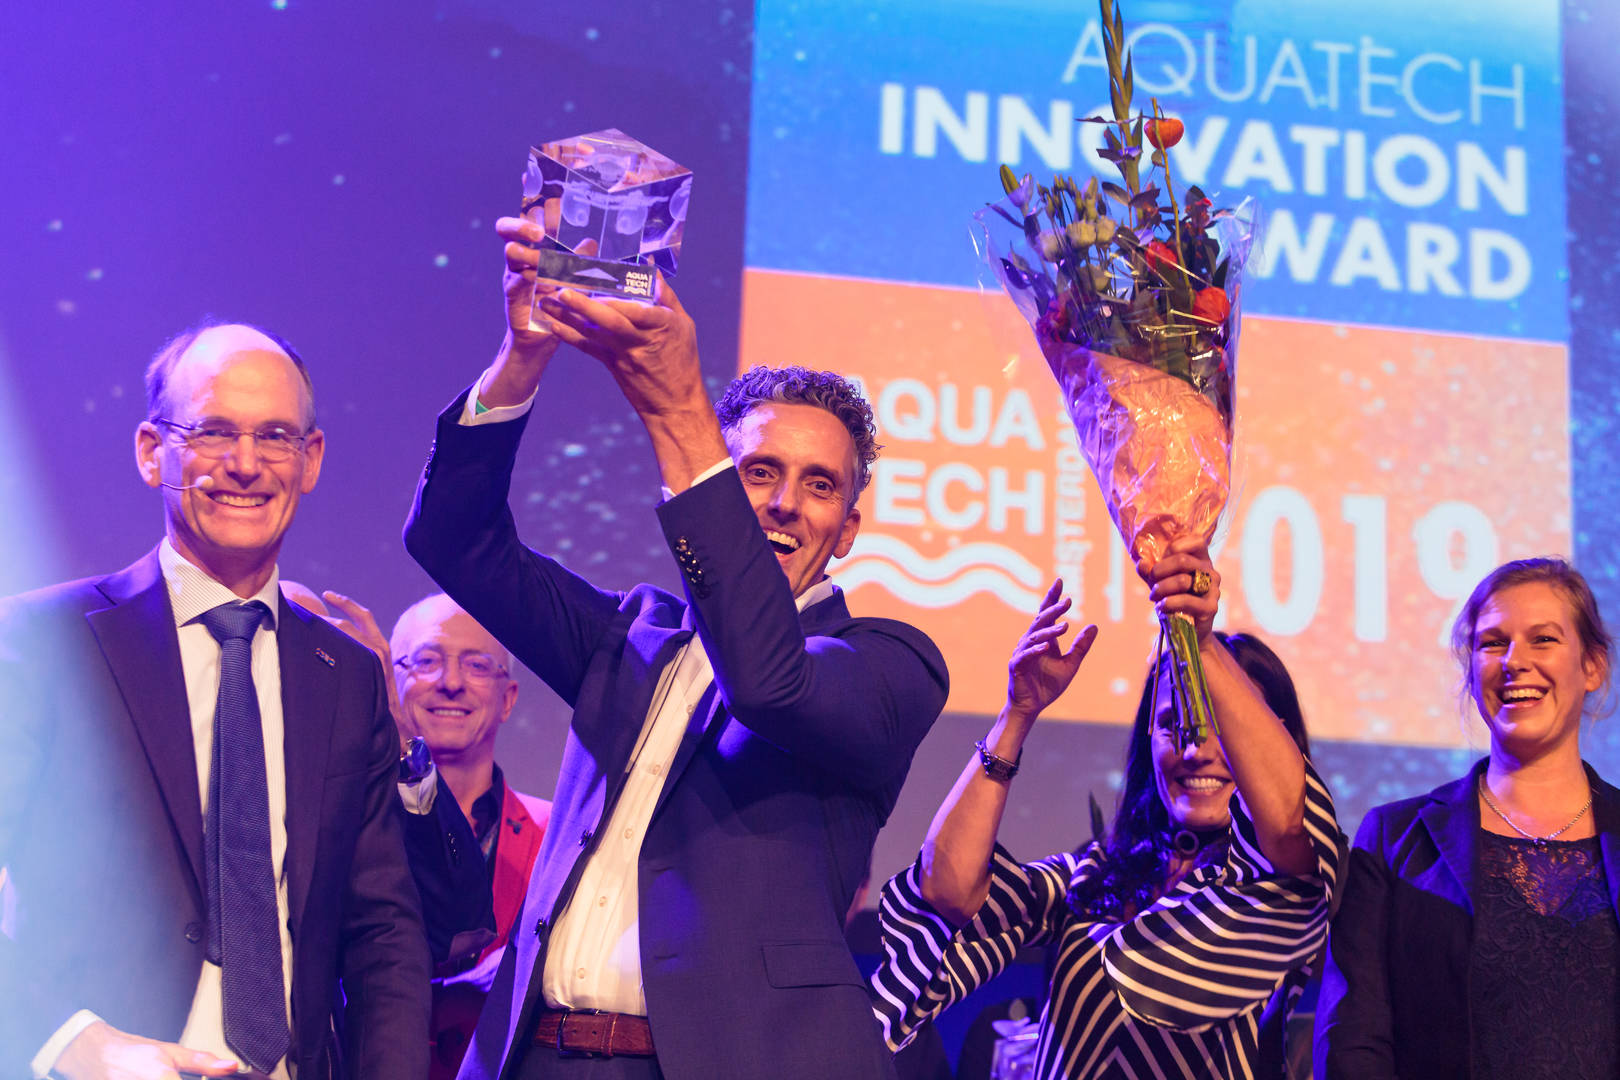 Winners of the Aquatech Innovation Award 2019.